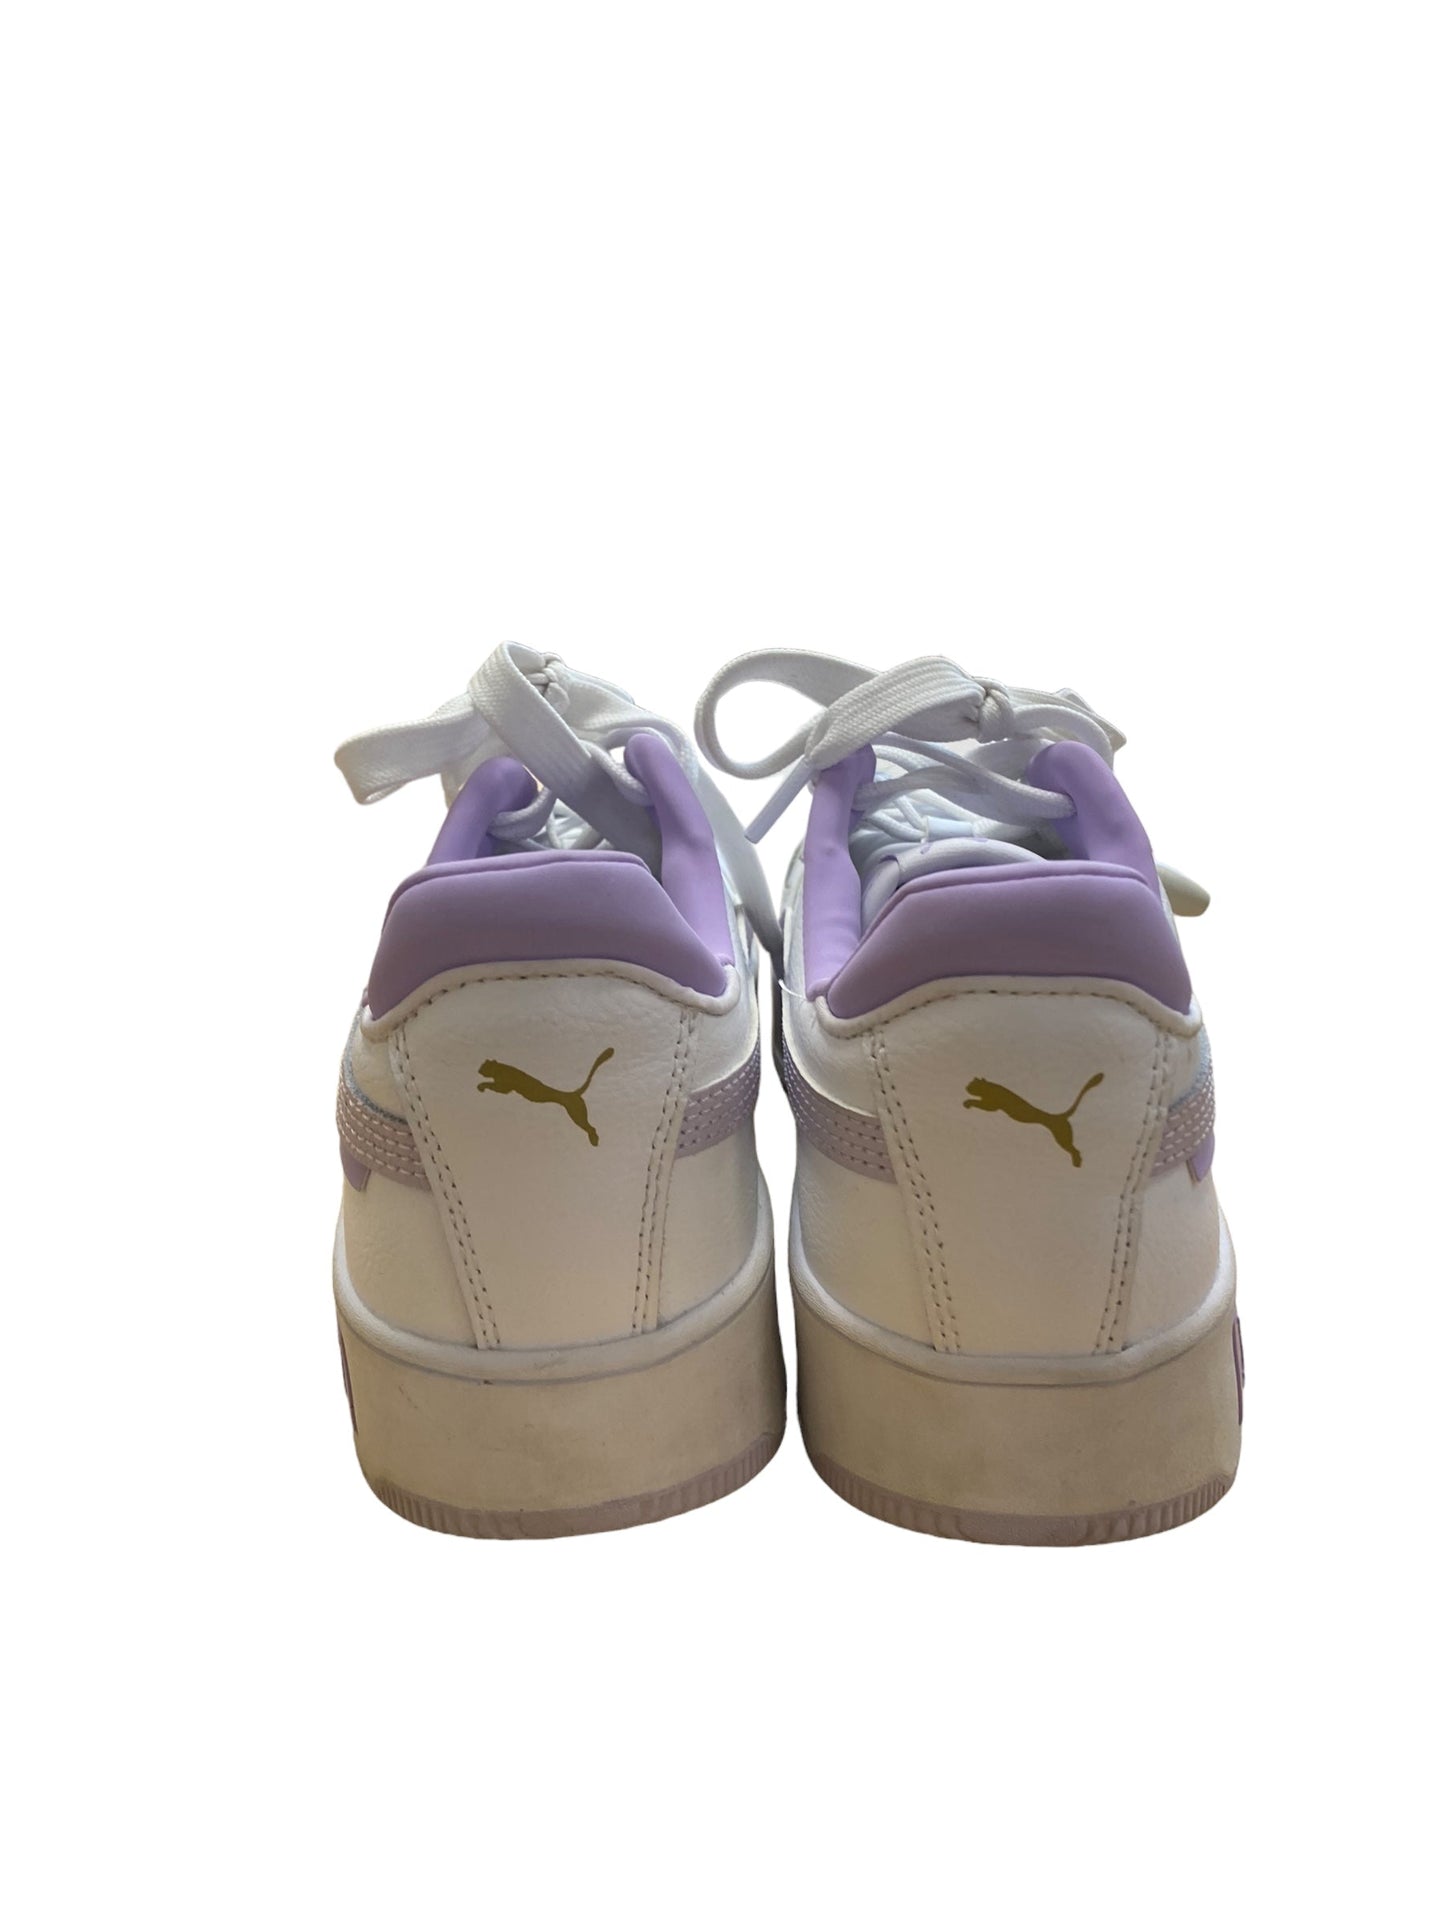 Purple & White Shoes Sneakers Puma, Size 7.5